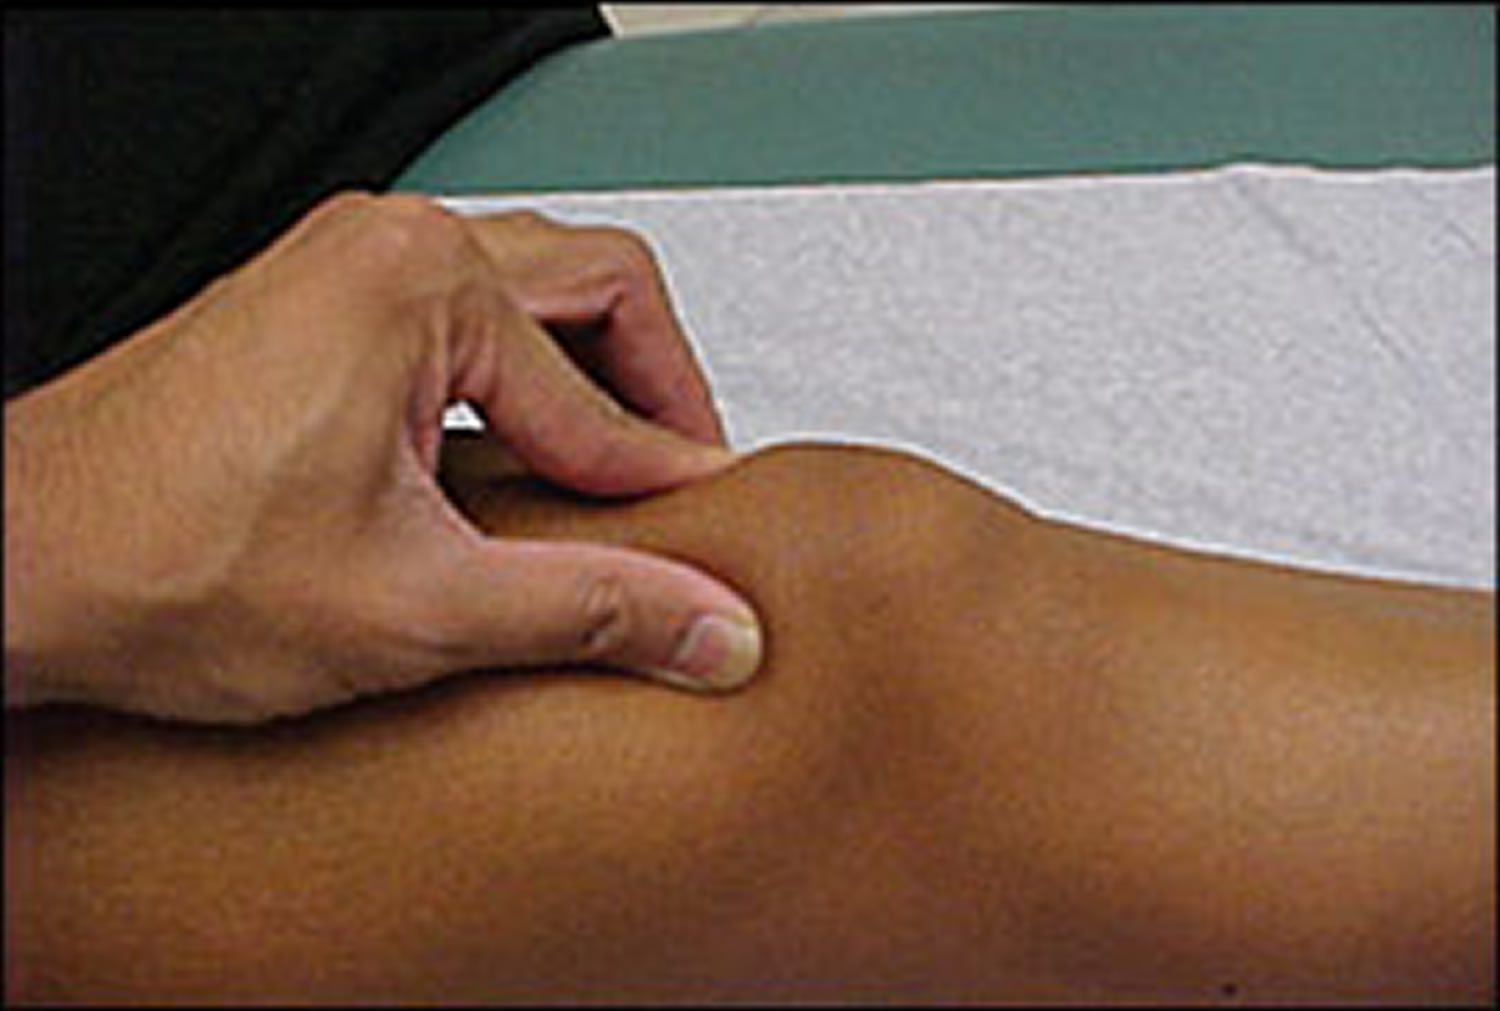 patellofemoral pain syndrome - patellar grind test